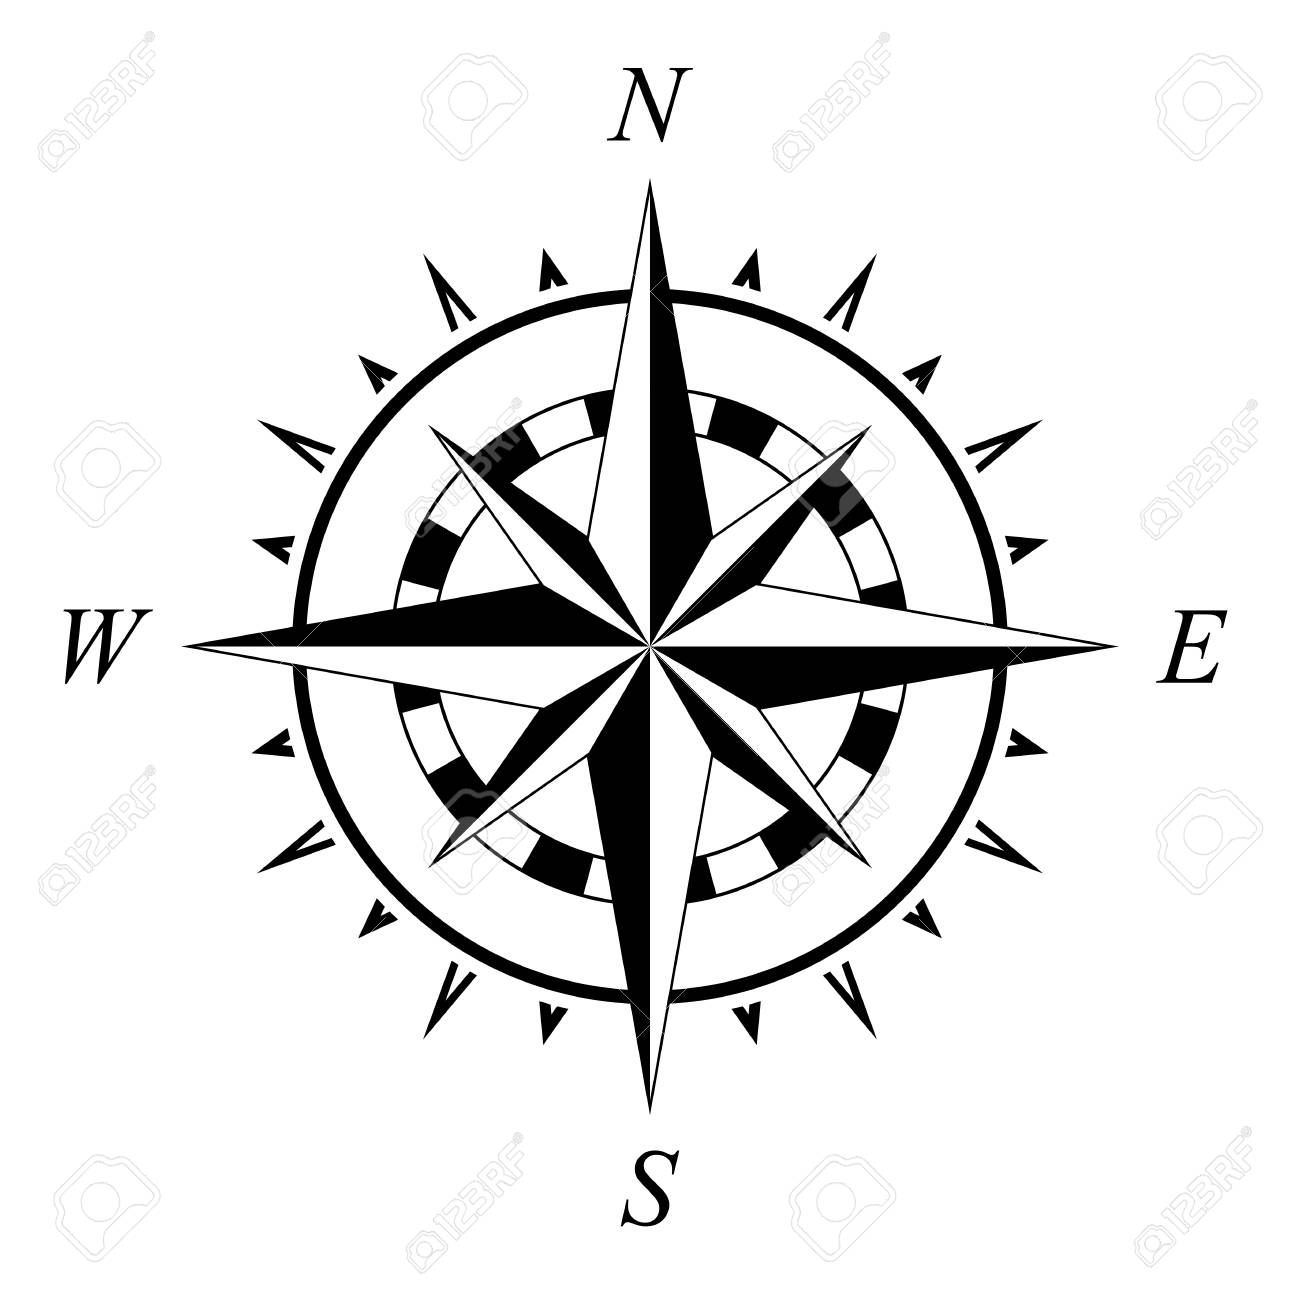 Compass rose marine navigation illustration isolated on white...